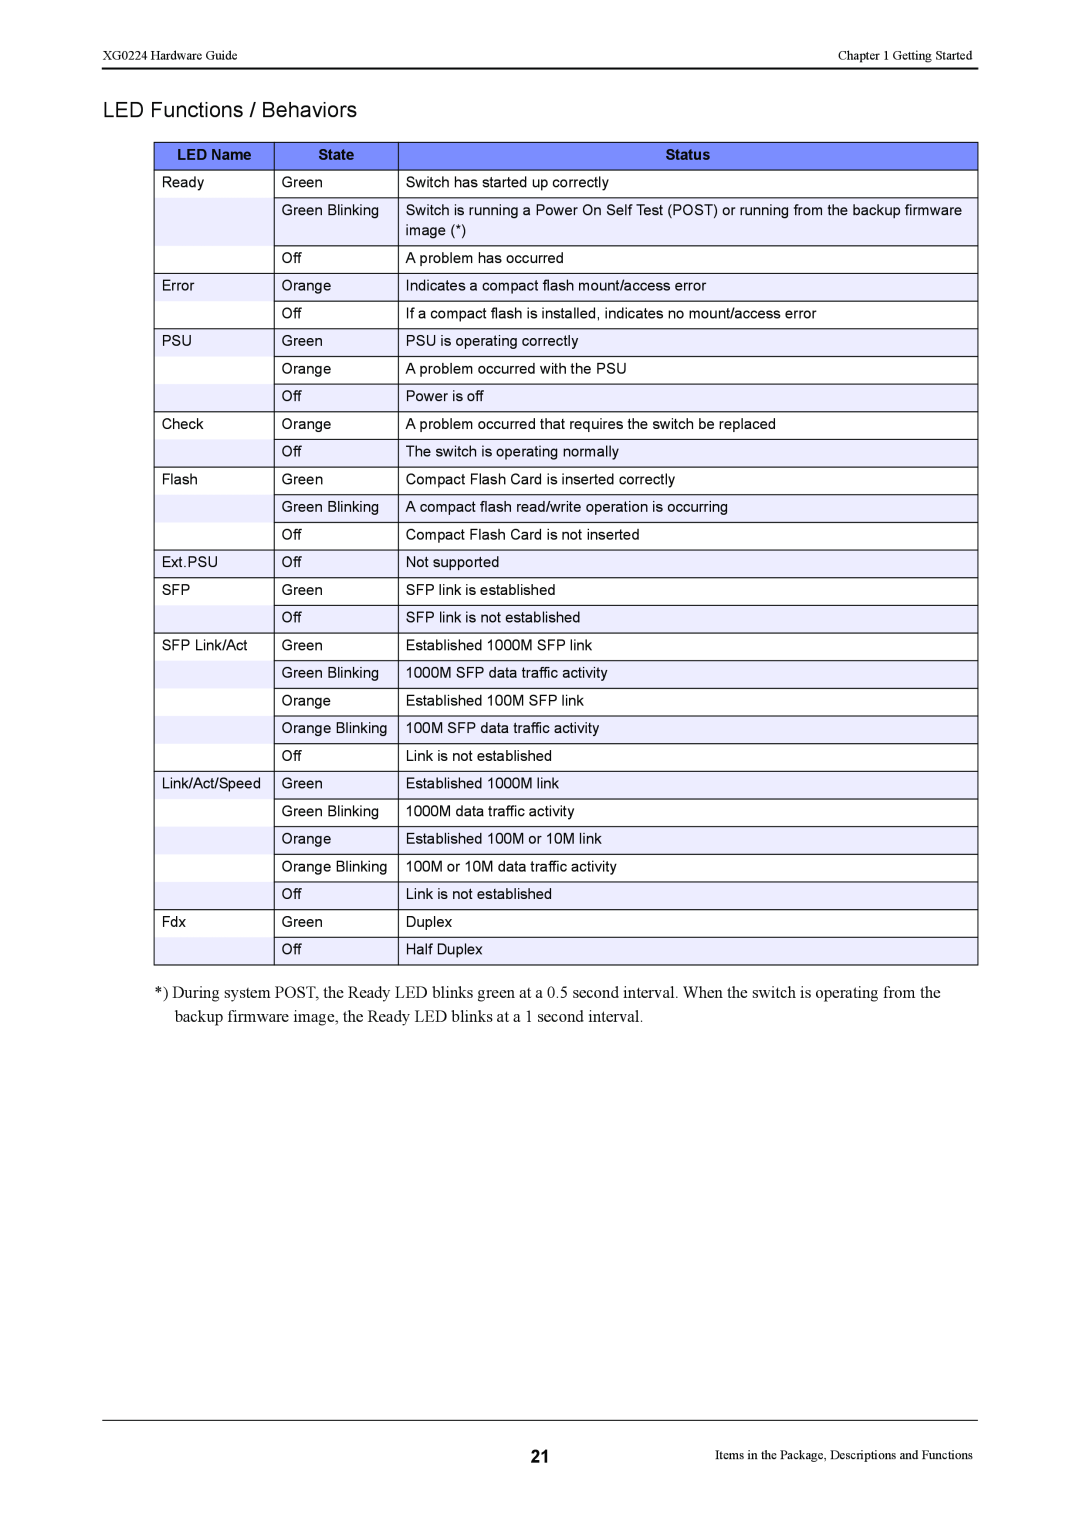 Fujitsu XG0224 manual LED Functions / Behaviors, LED Name, State, Status 